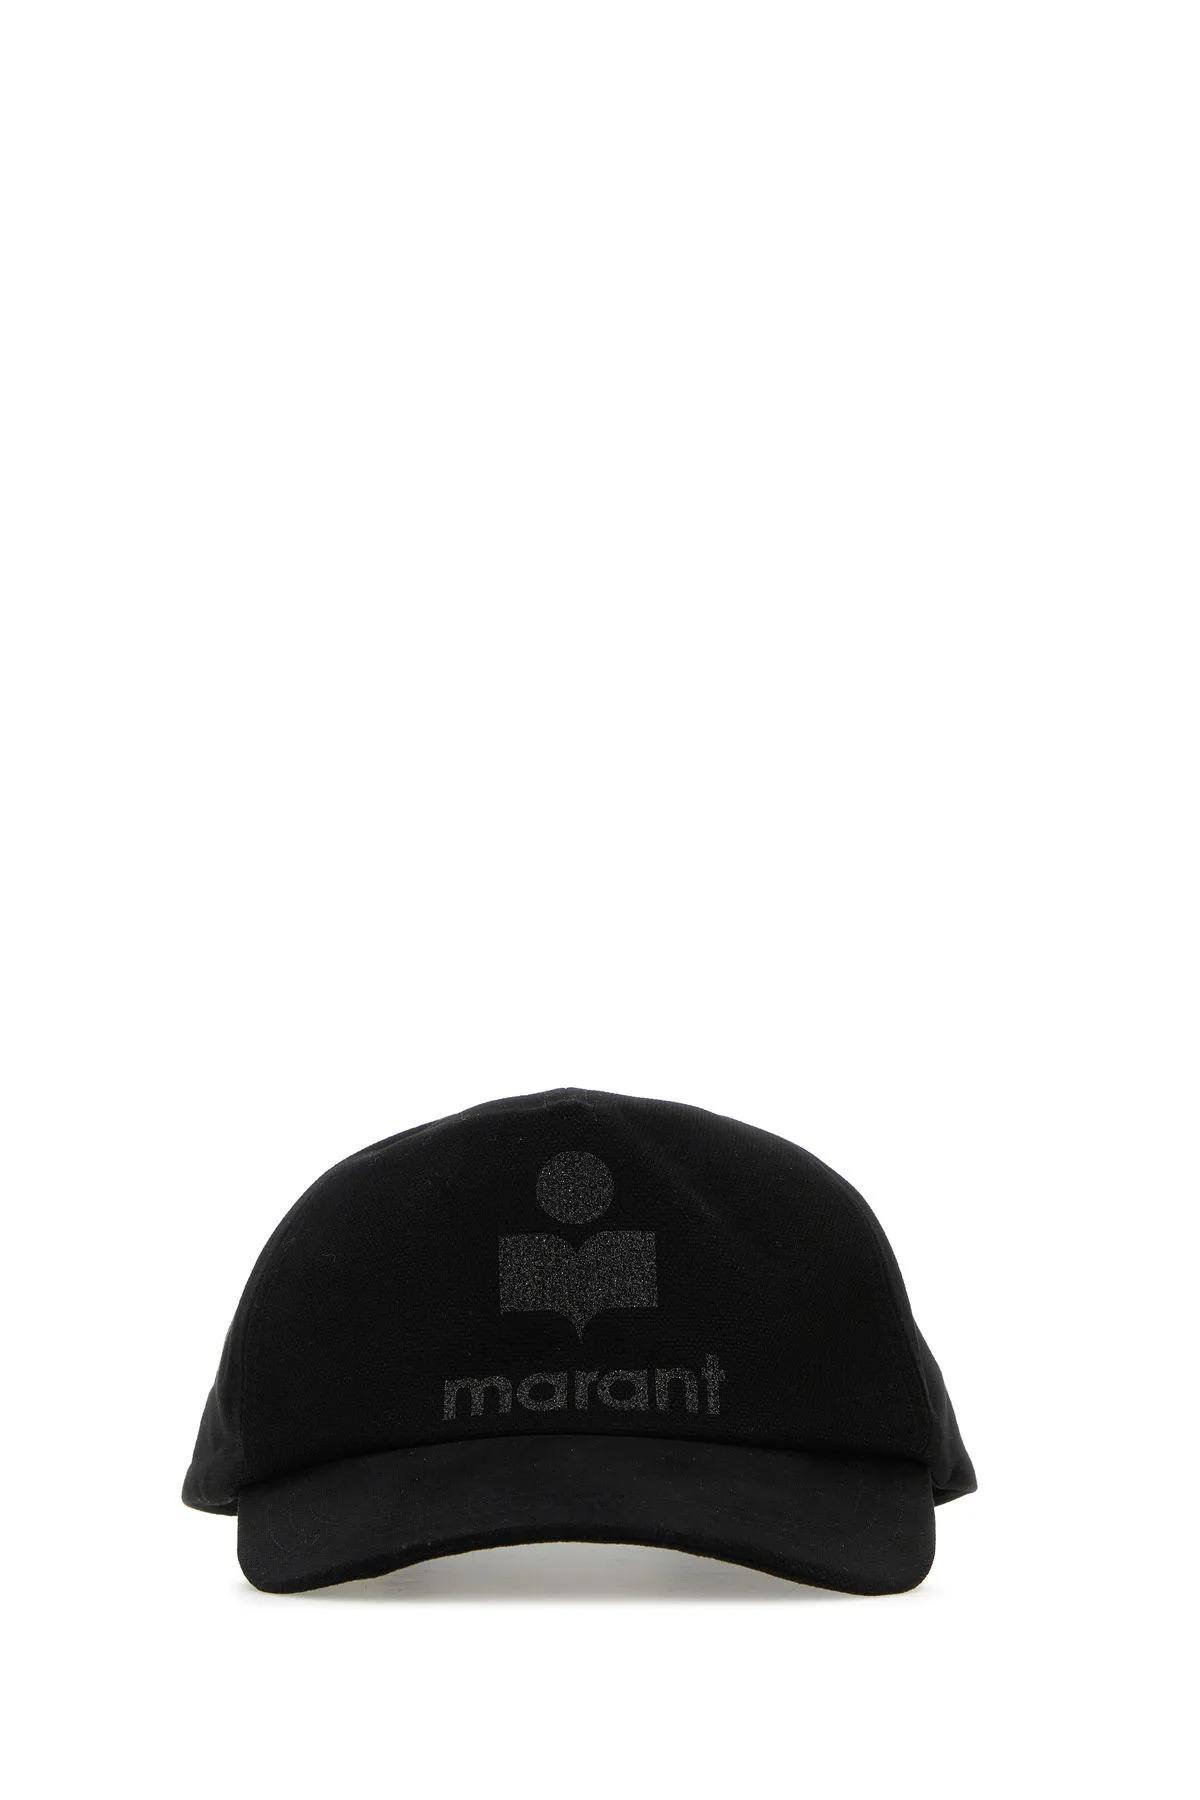 ISABEL MARANT BLACK COTTON TYRON BASEBALL CAP